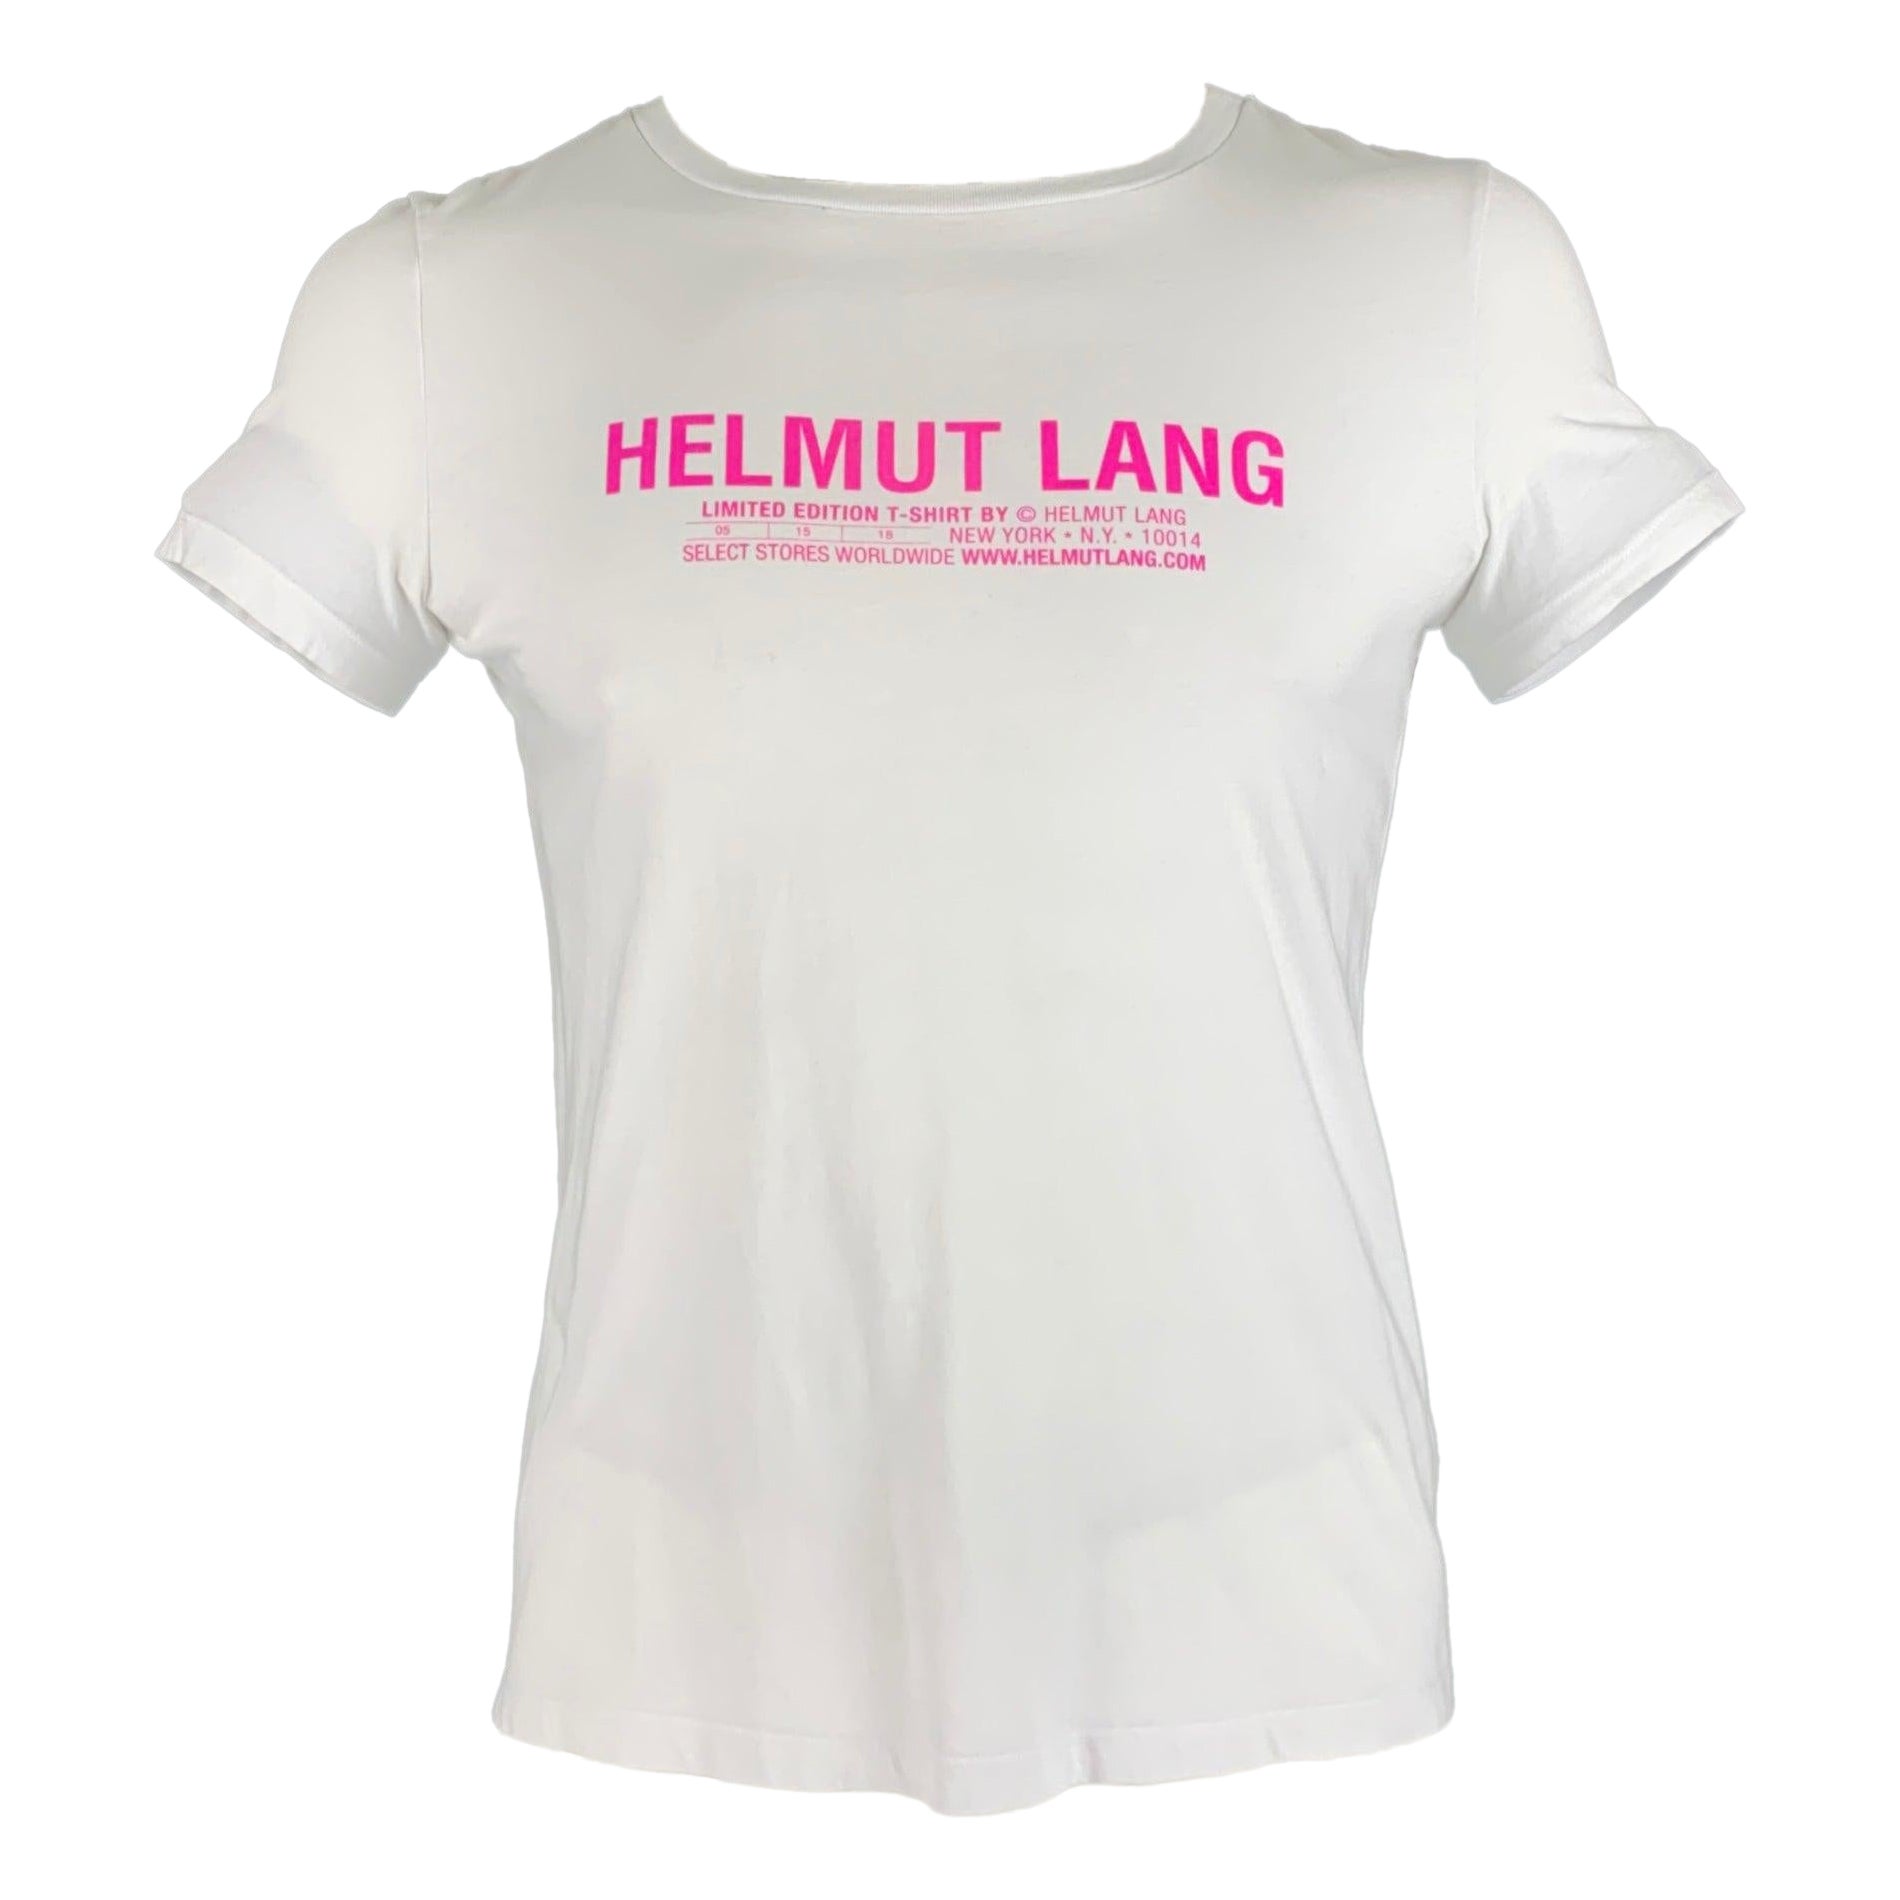 Helmut Lang Shirts